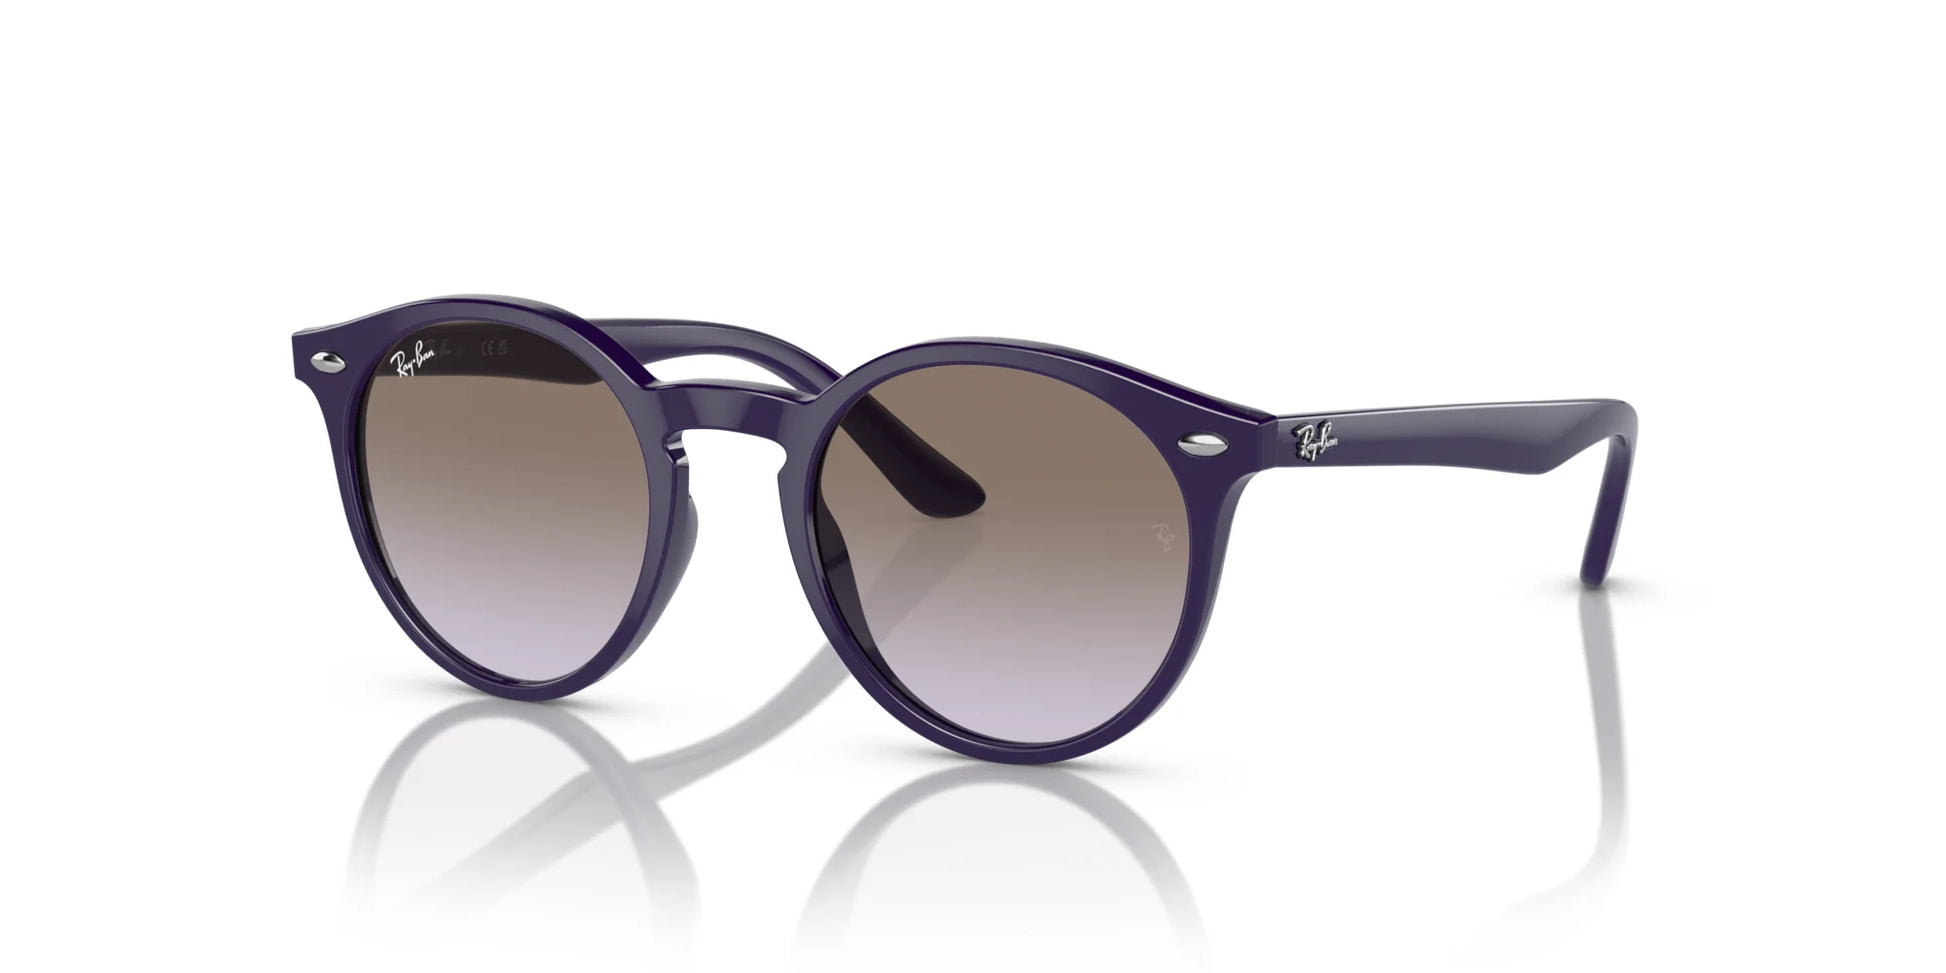 Ray-Ban RJ9064S Sunglasses Violet / Lillac Light Grey